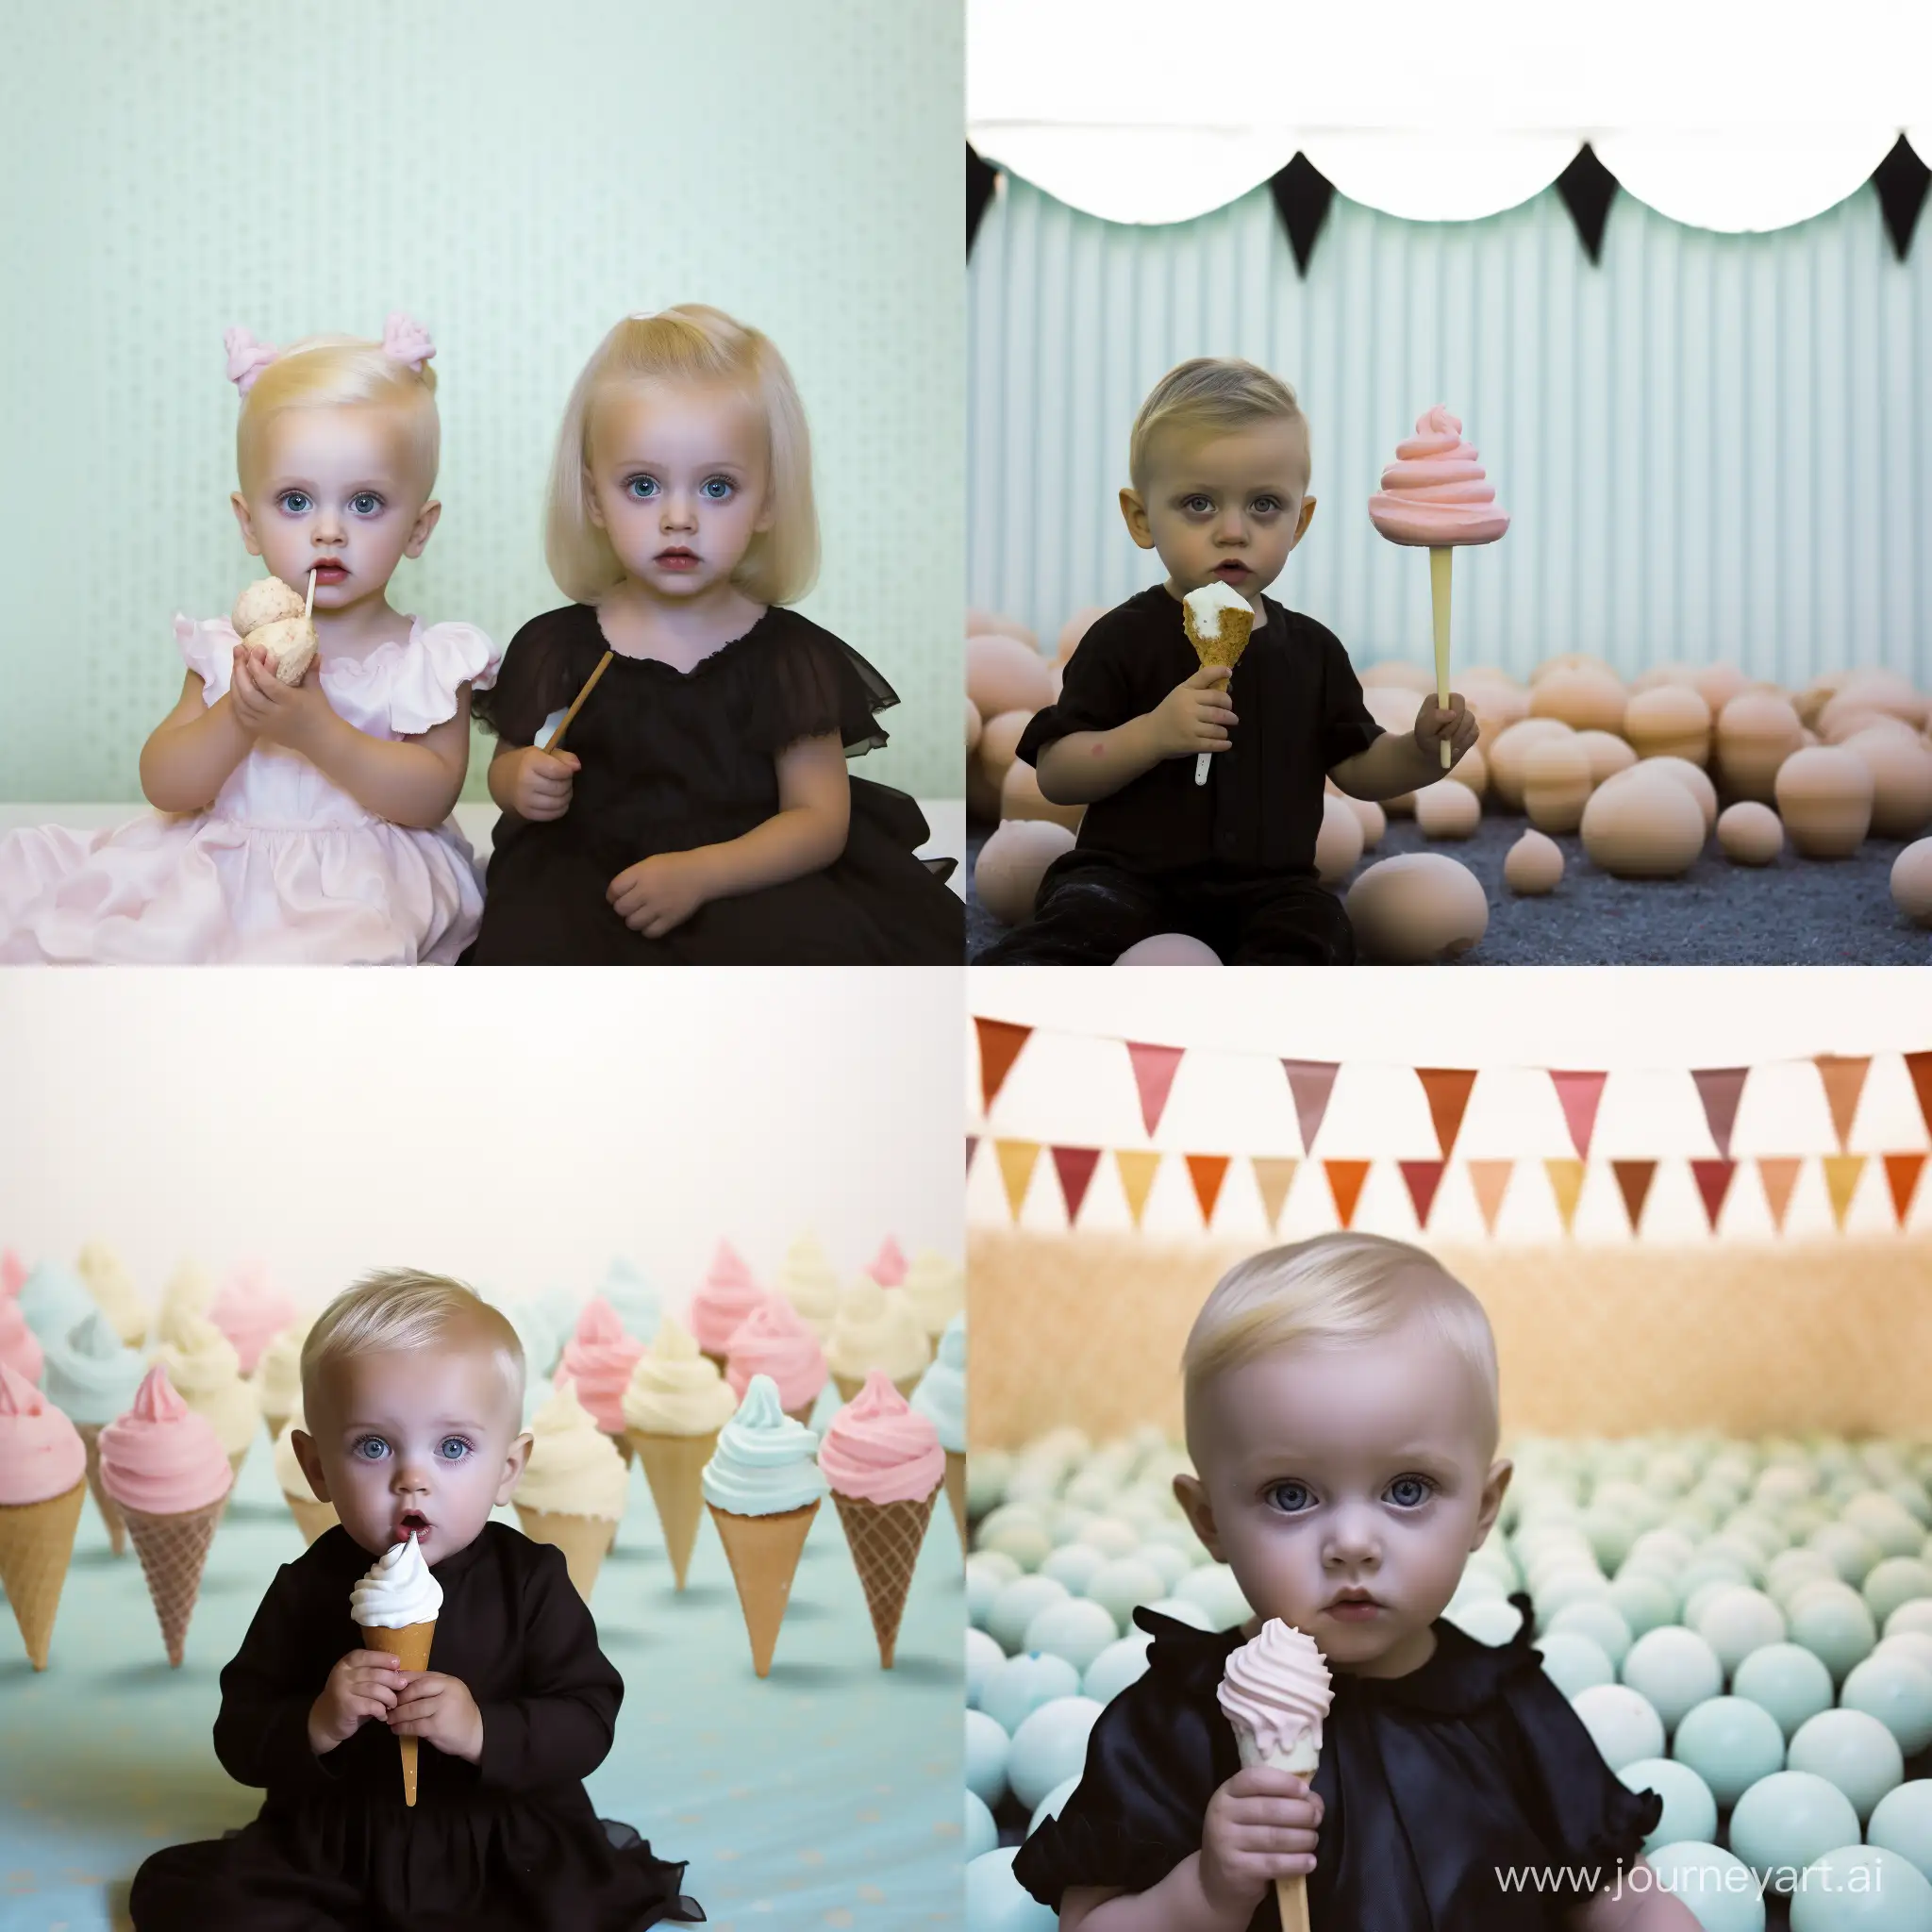 Adorable-Babies-Enjoying-Playful-Ice-Cream-Mess-in-Hypereal-8K-HDR-Photo